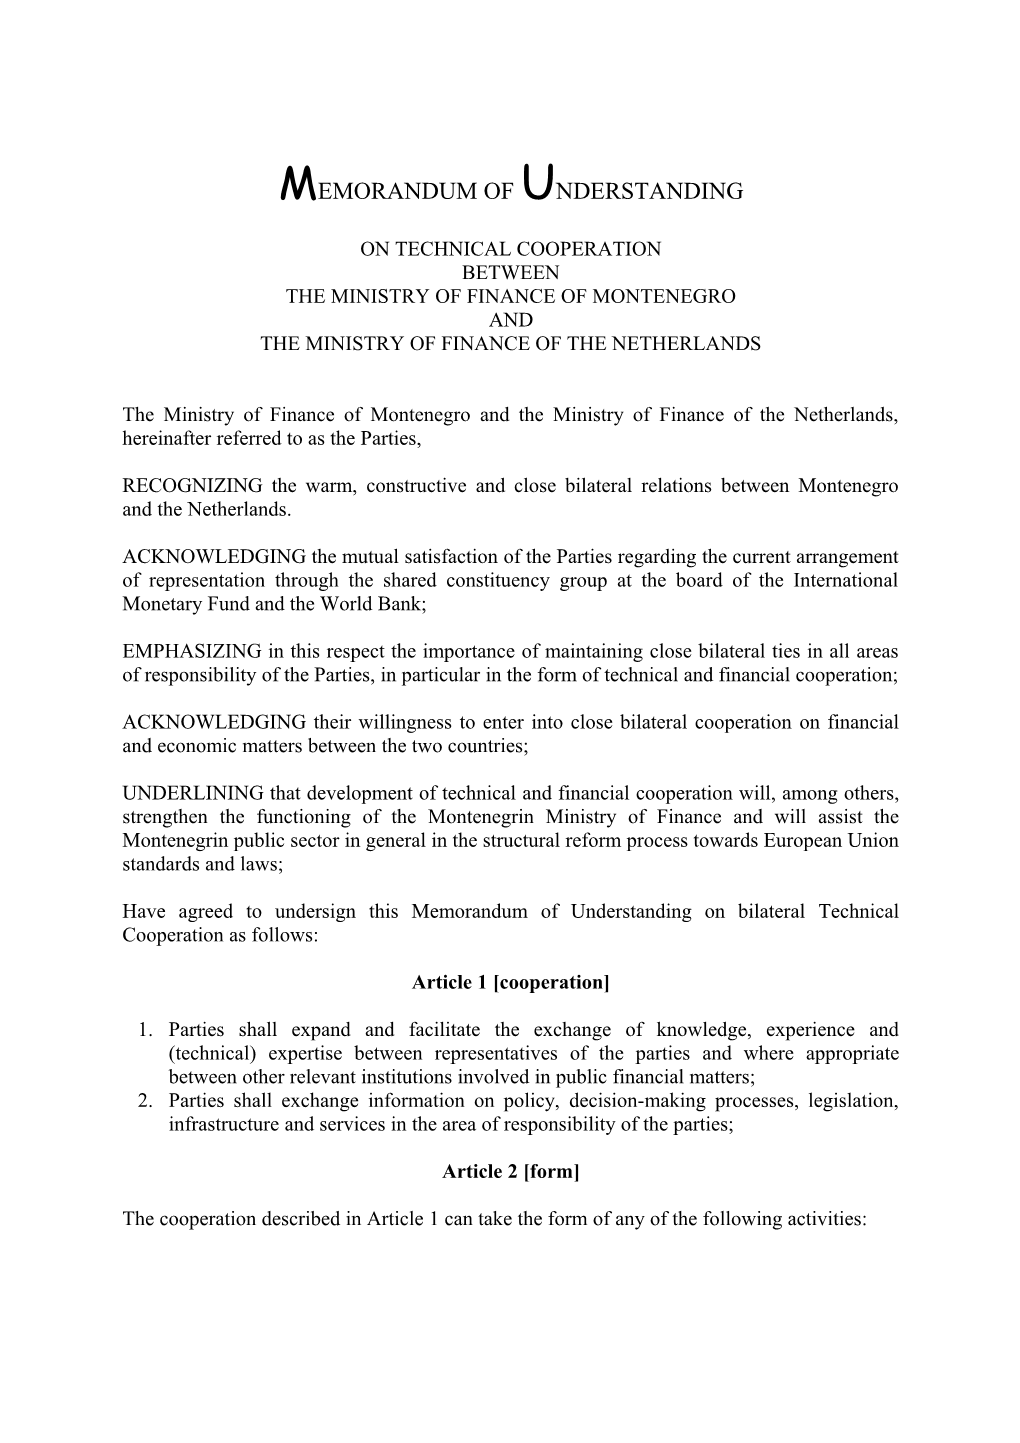 Memorandum of Understanding on Technical Cooperation Between the Ministry of Finance Of